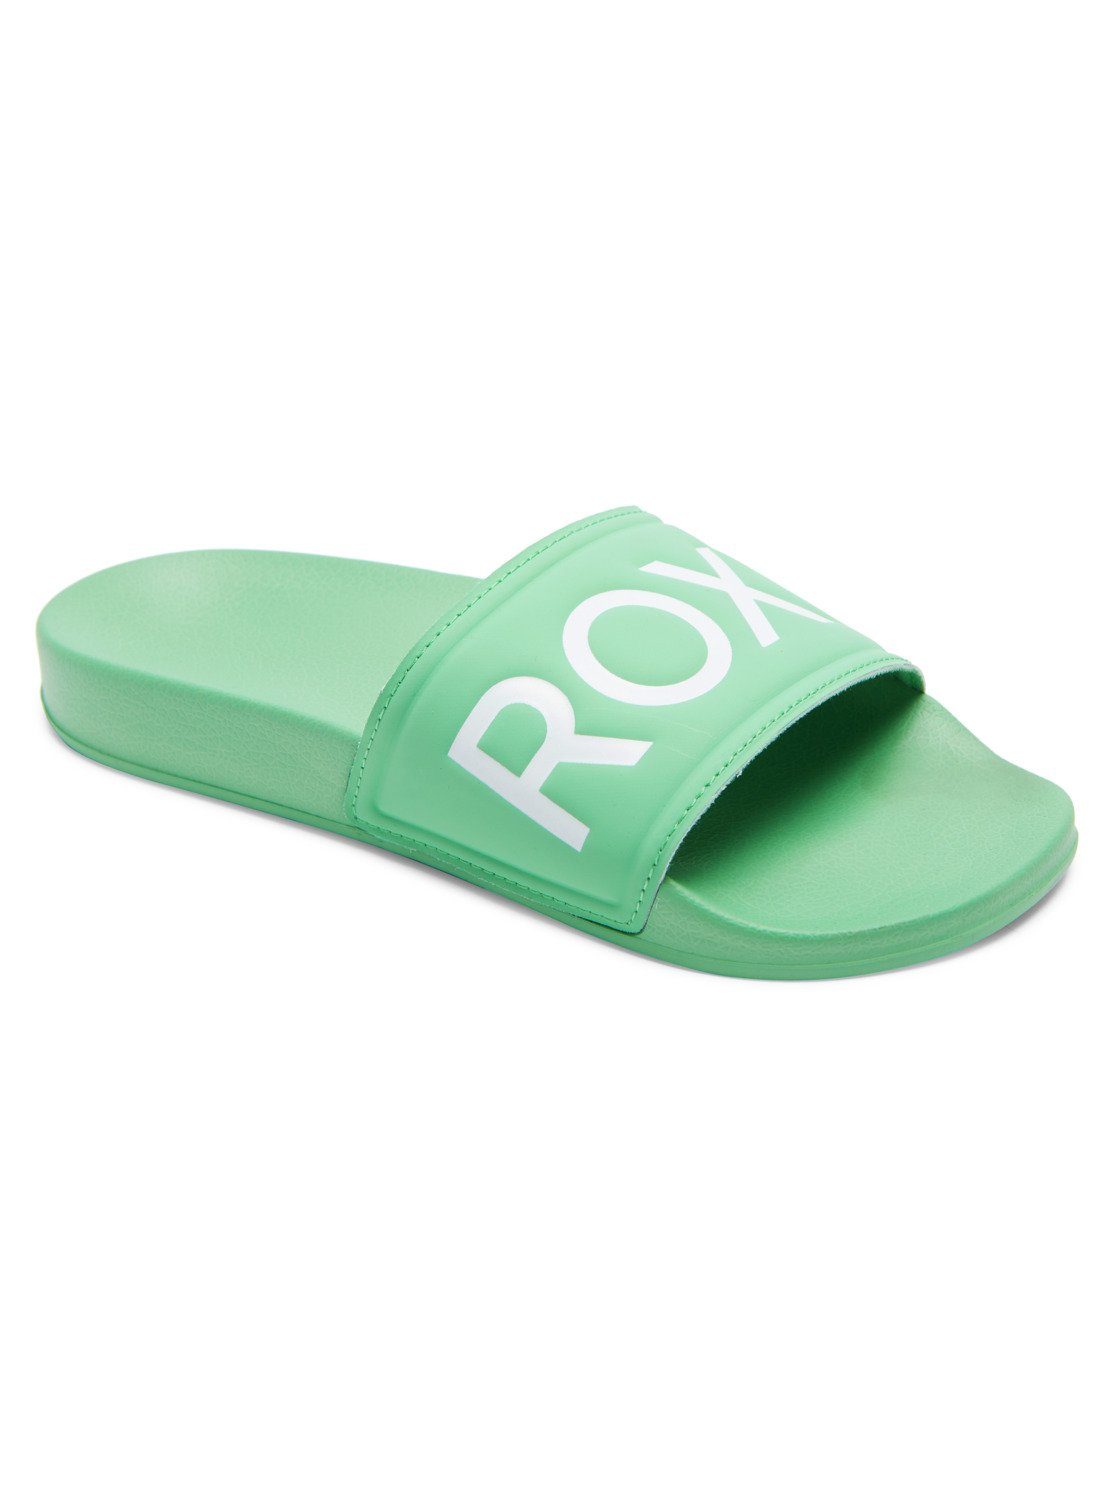 Roxy Slippy Green Absinthe Sandale